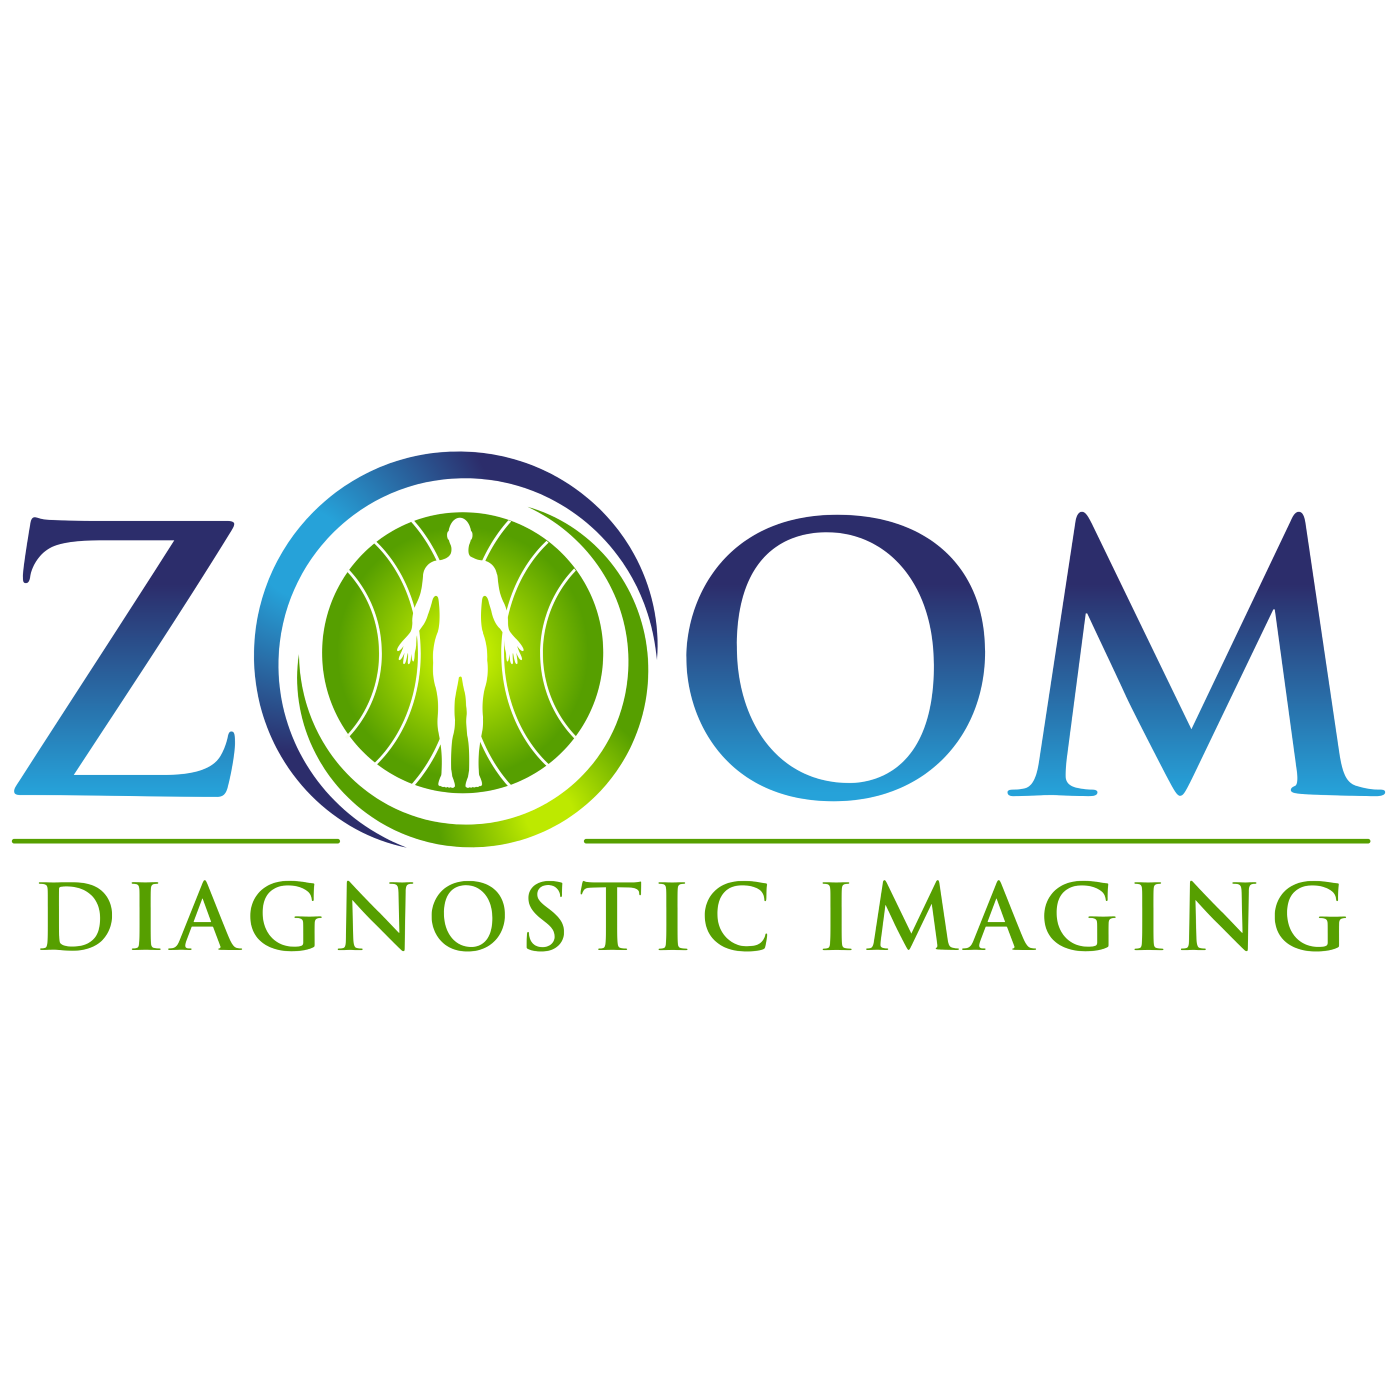 Zoom Diagnostic Imaging Logo